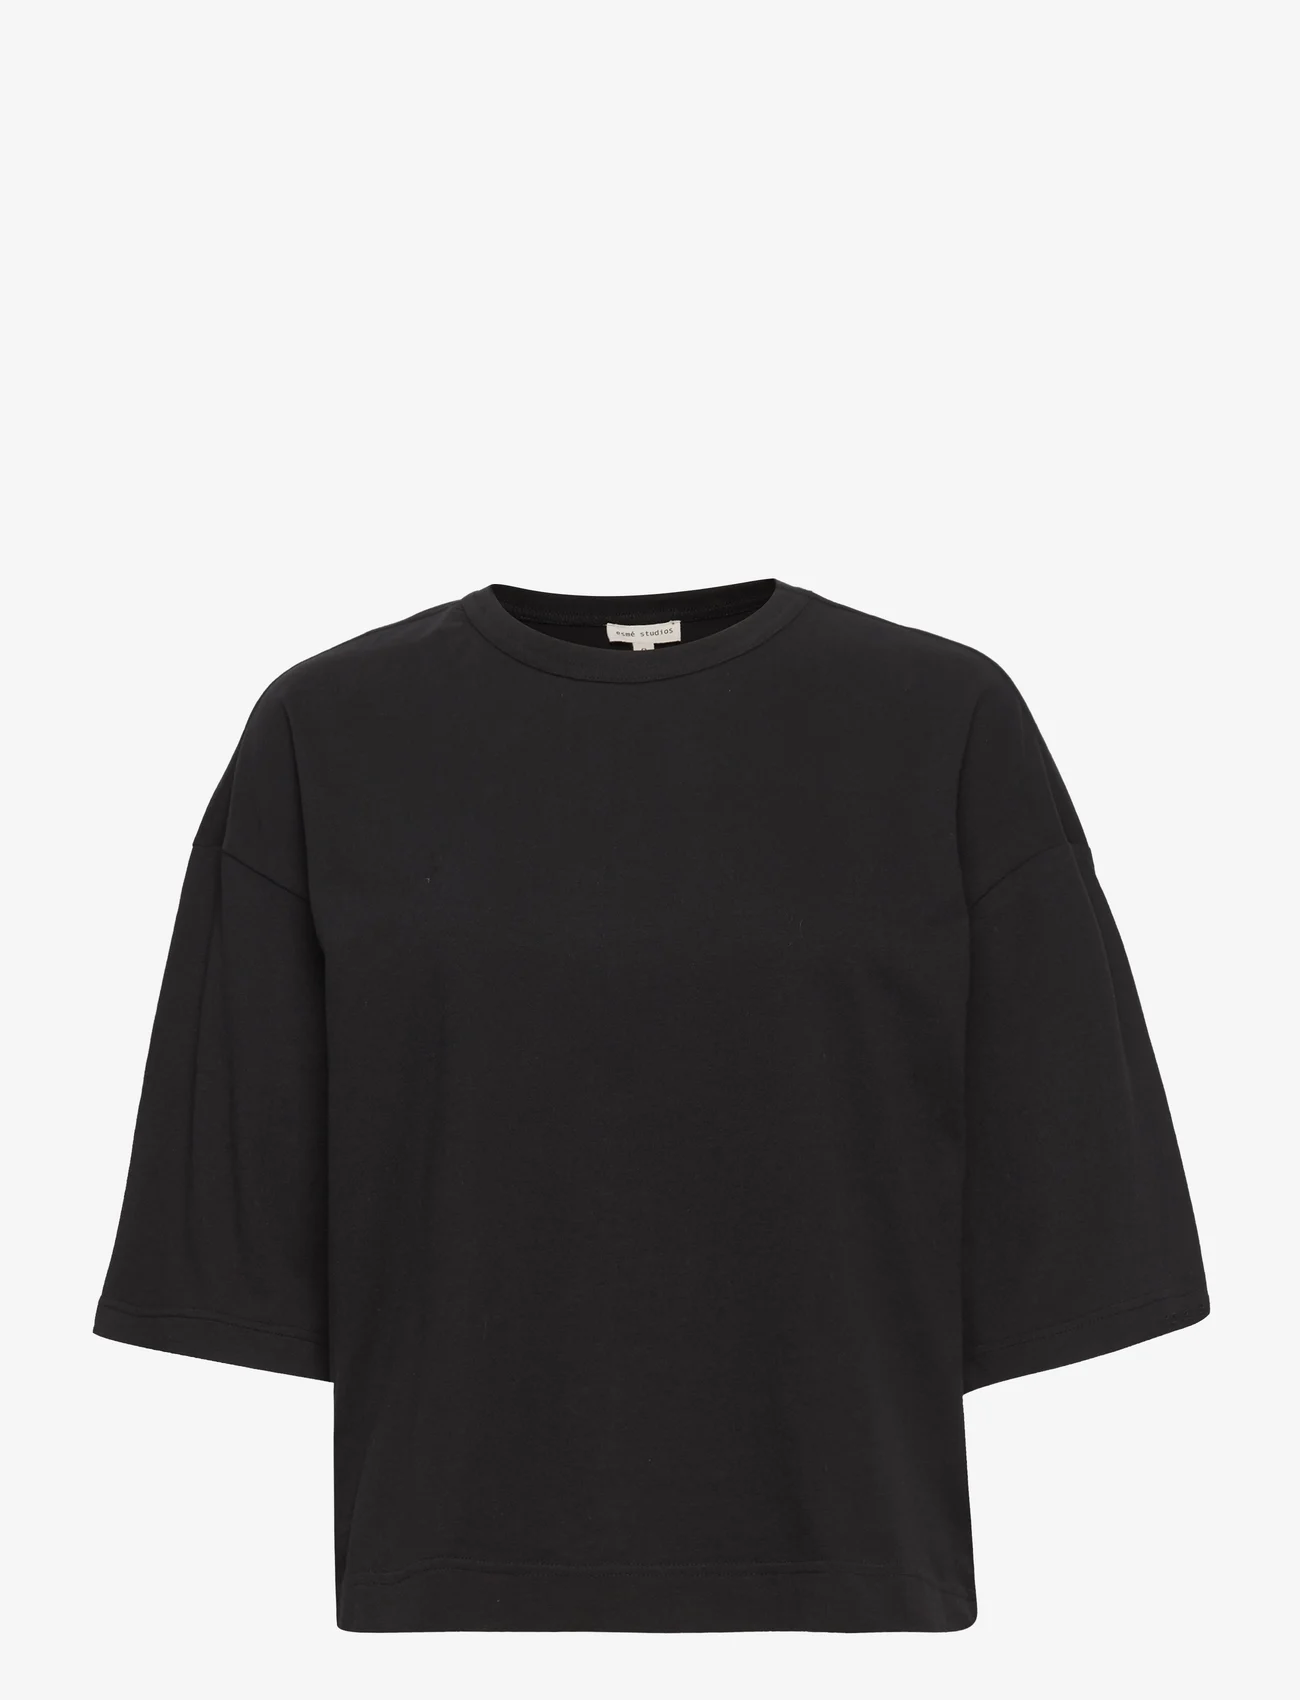 Esme Studios - ESSigne 2/4 Boxy T-shirt - GOTS - t-shirt & tops - black - 0